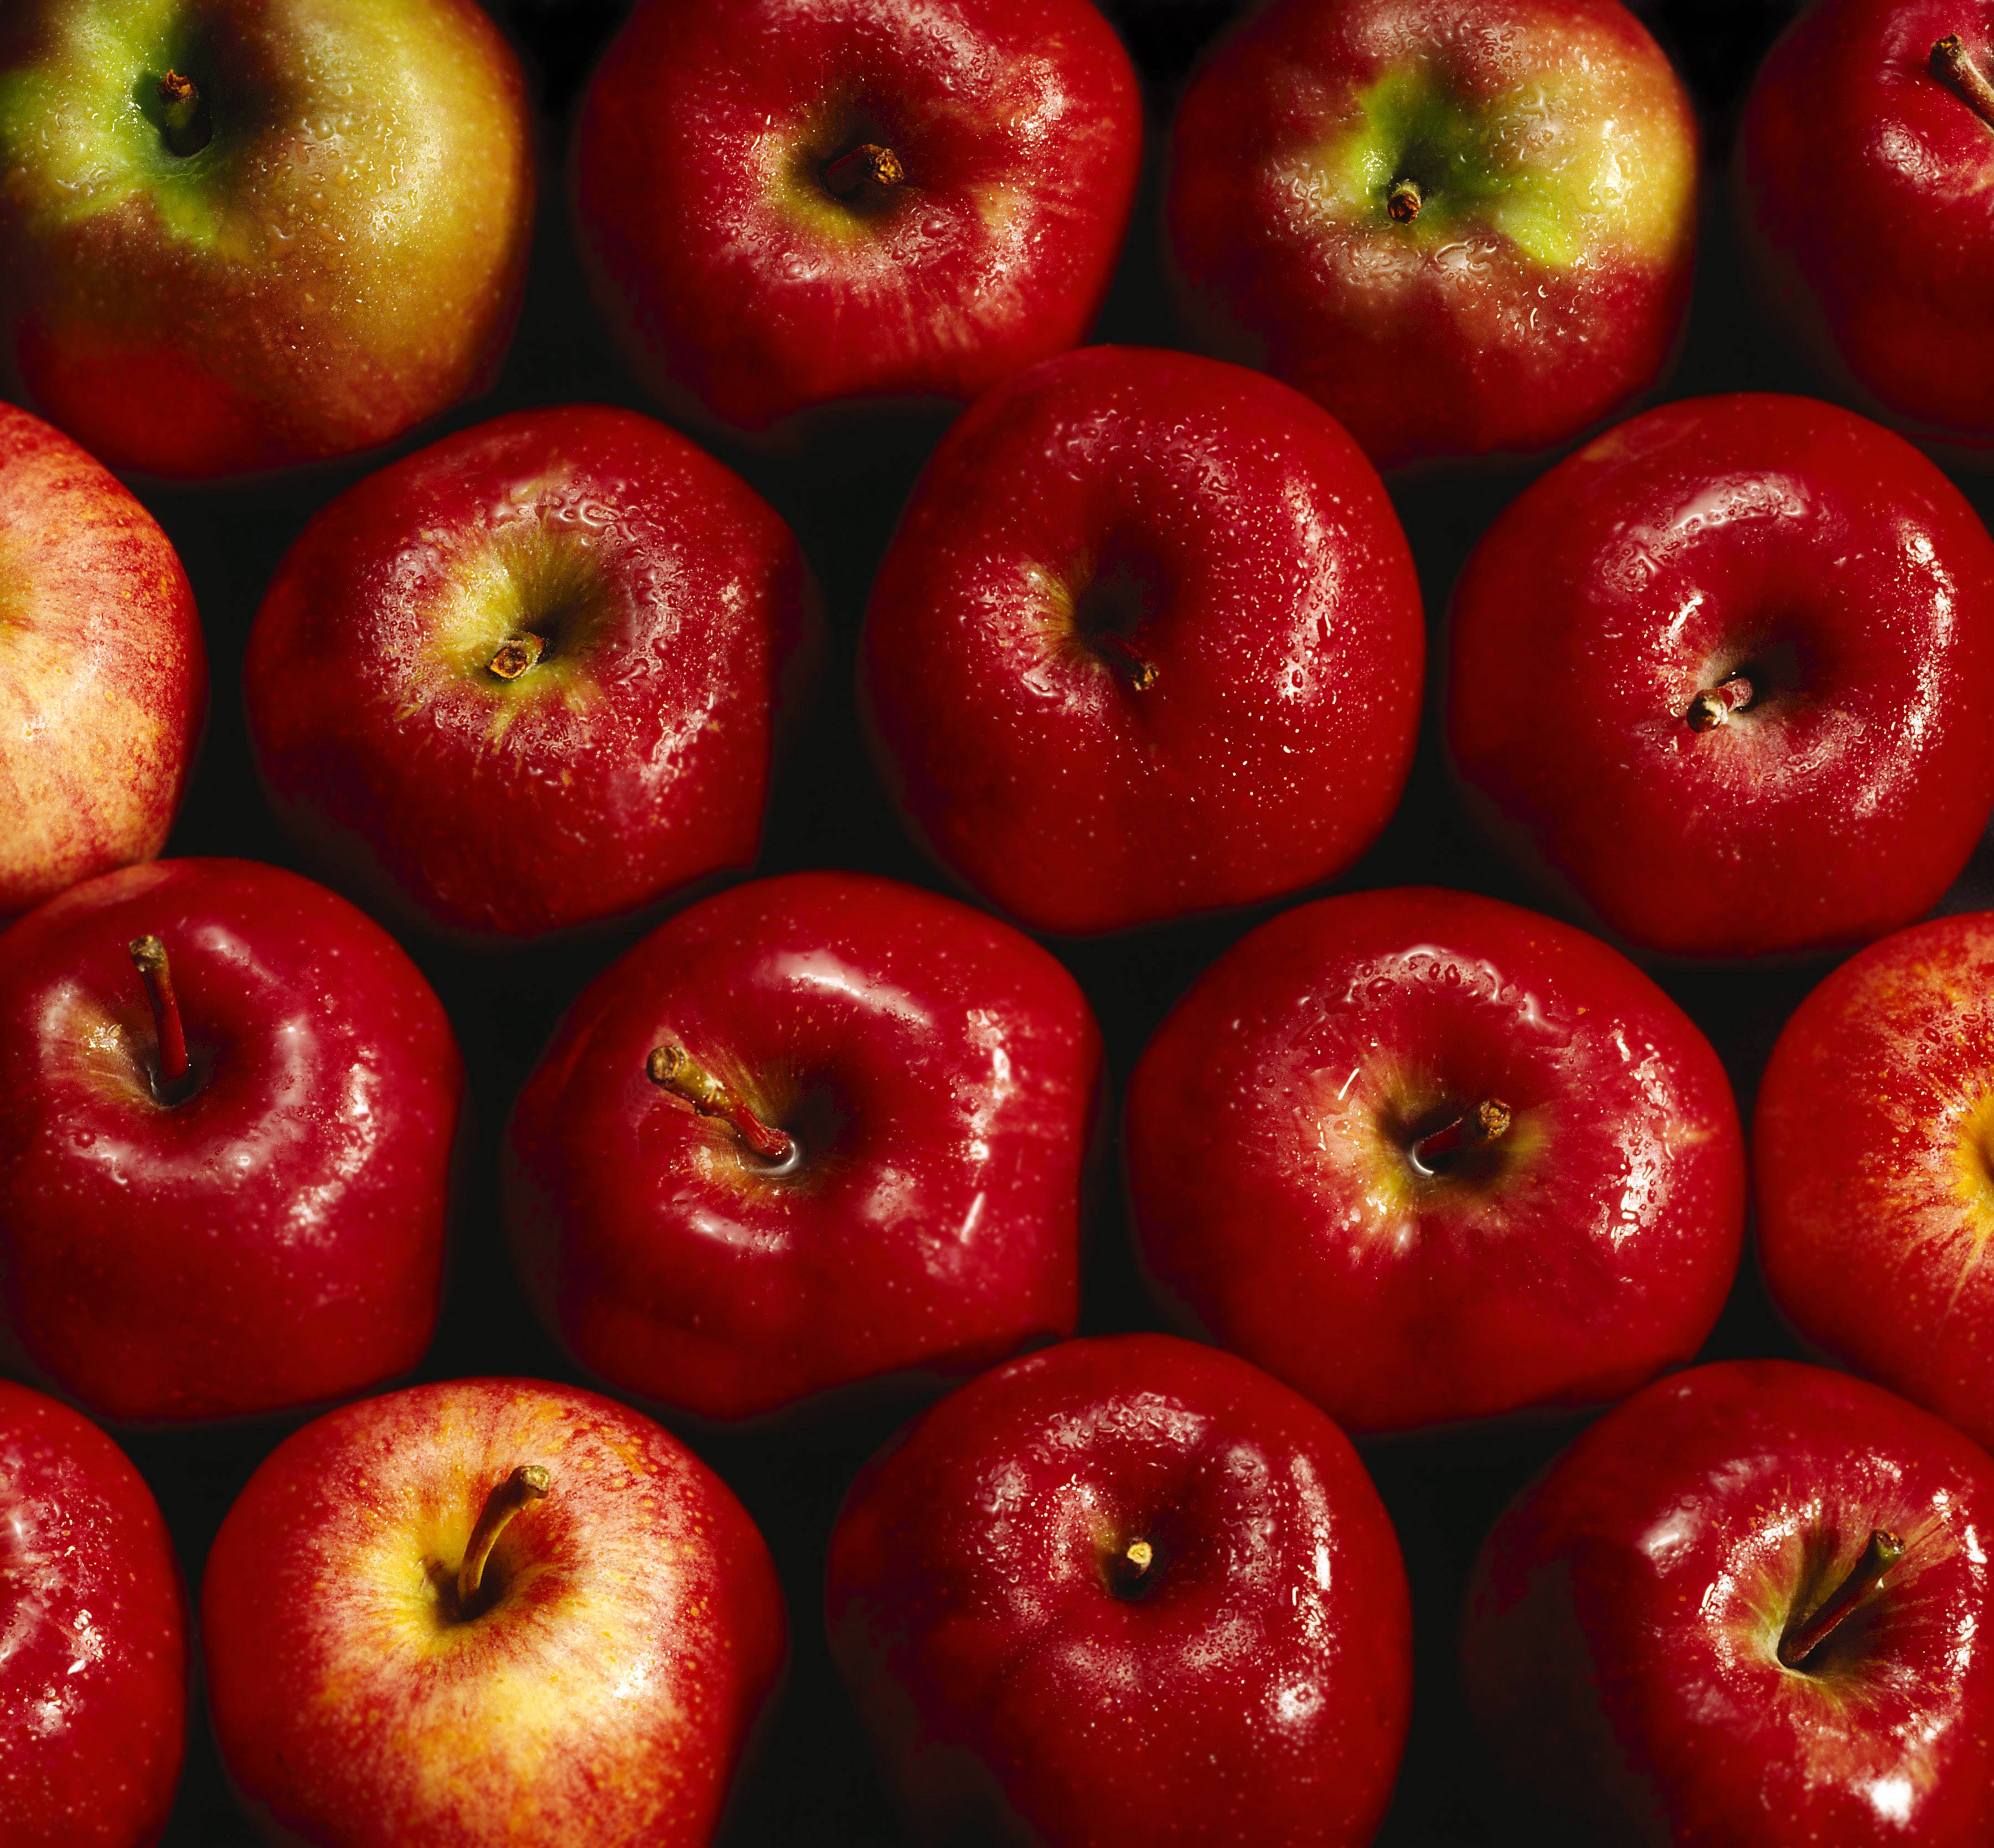 Apple fruit wallpaper for desktop background